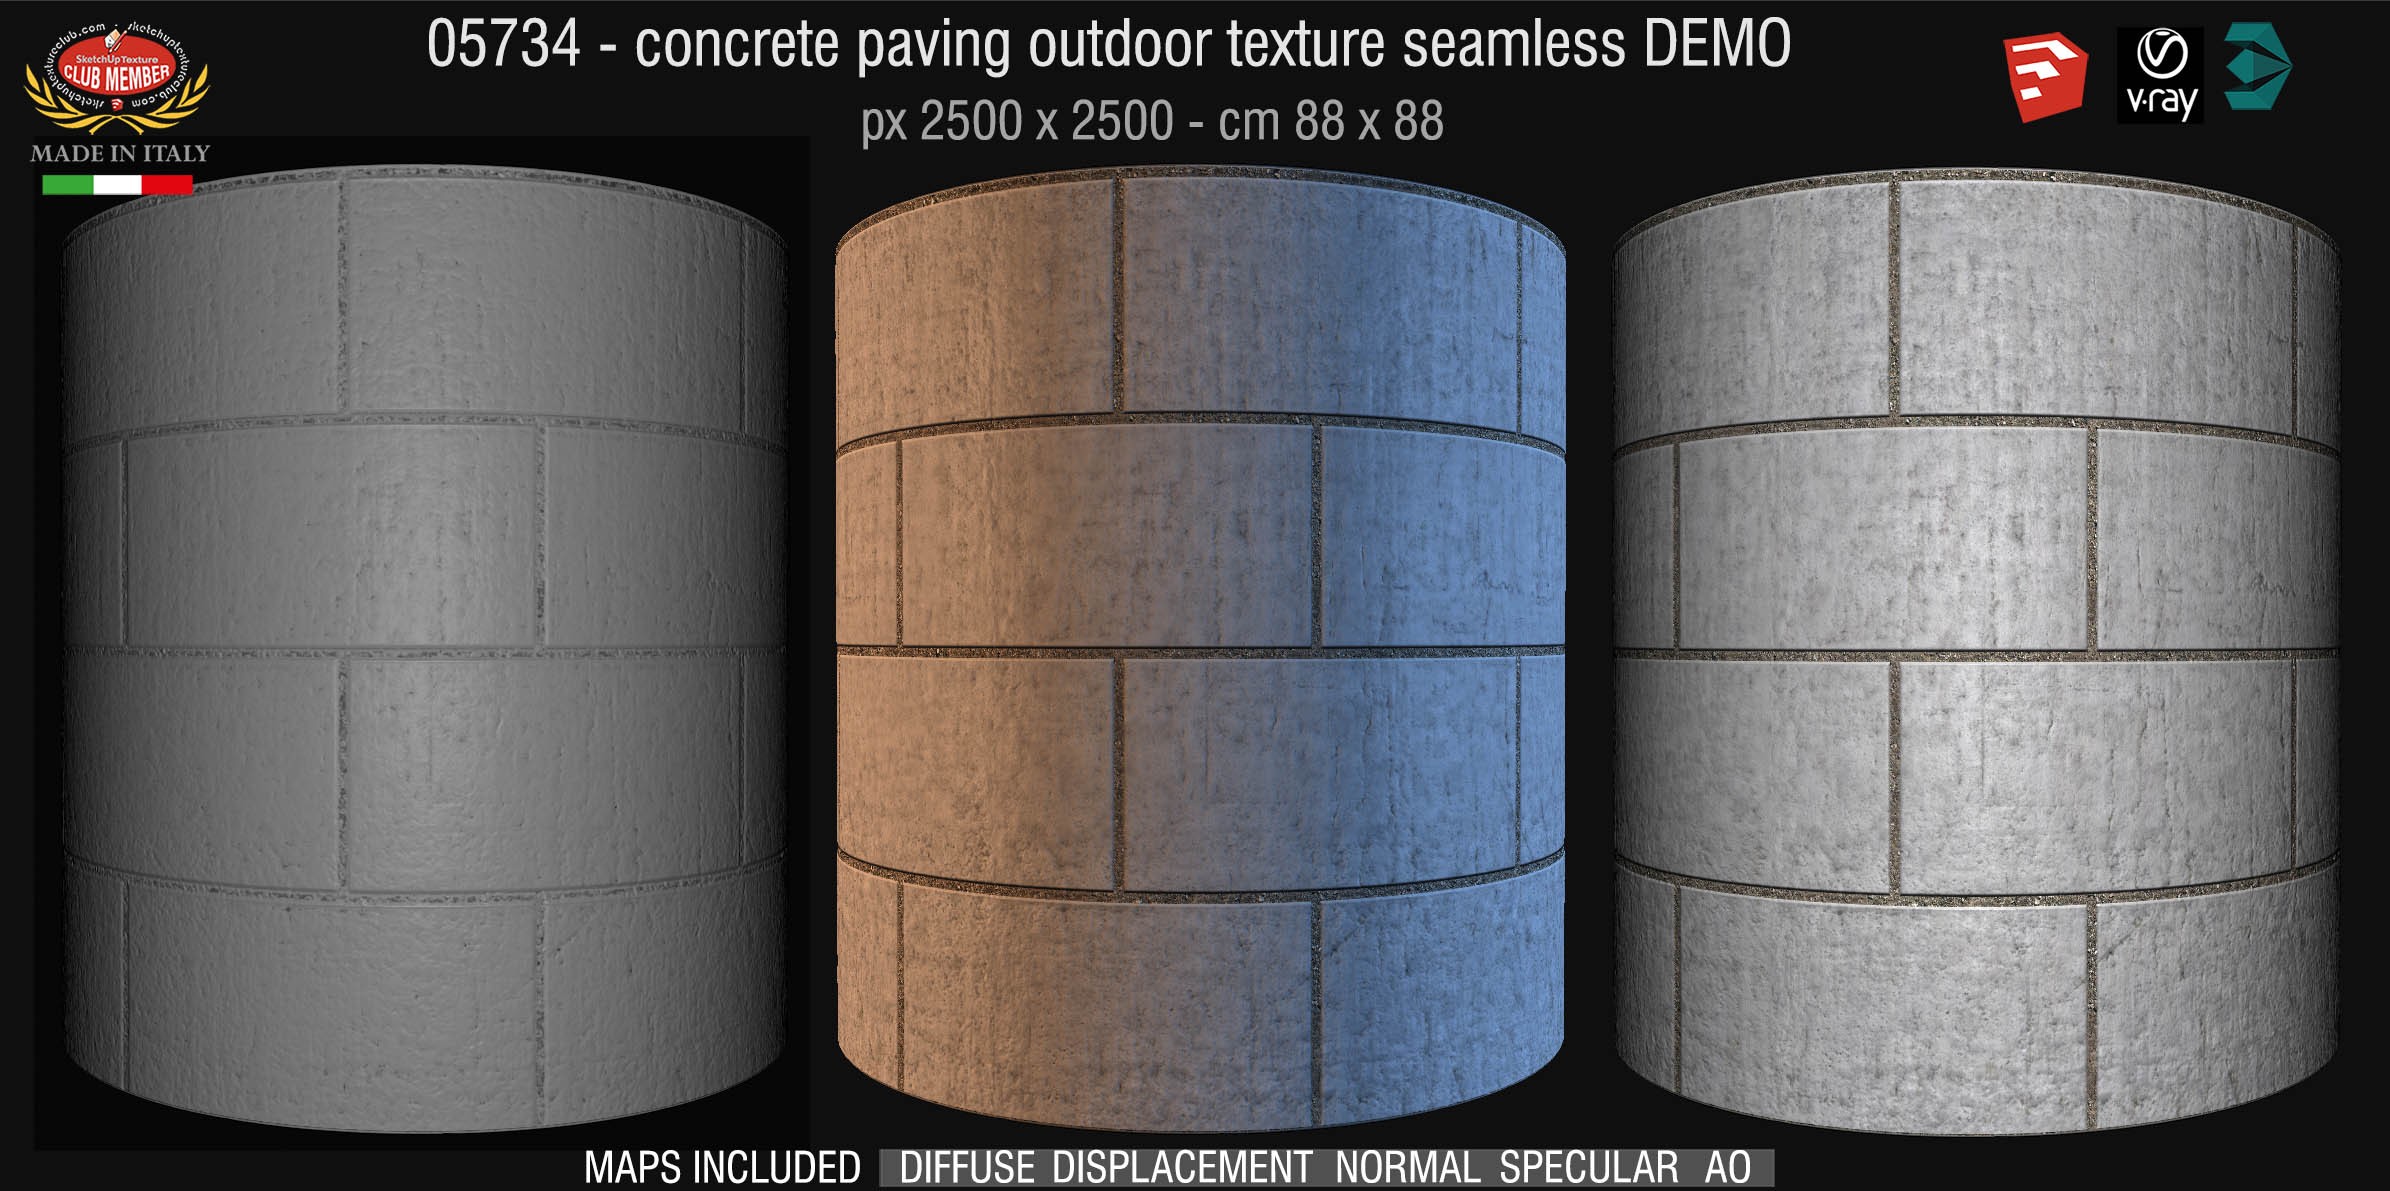 05734 HR Paving outdoor concrete regular block texture + maps DEMO